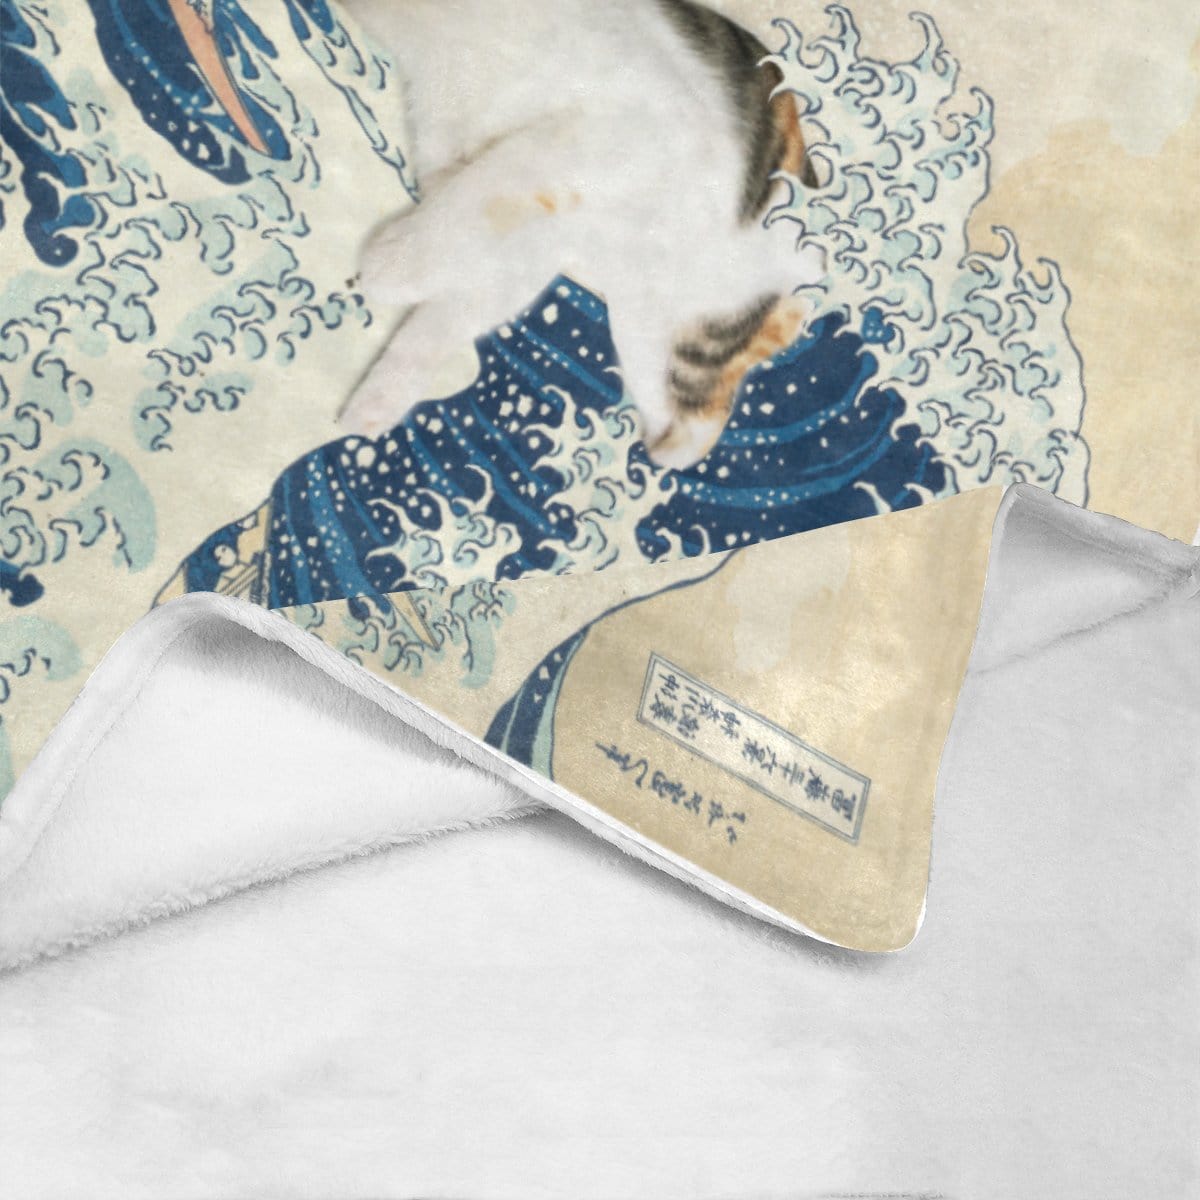 經典日本名畫-巨浪x寵物照片毛毯 The Cat in Great Wave of Kanagawa Blanket - HKGIFTFORU